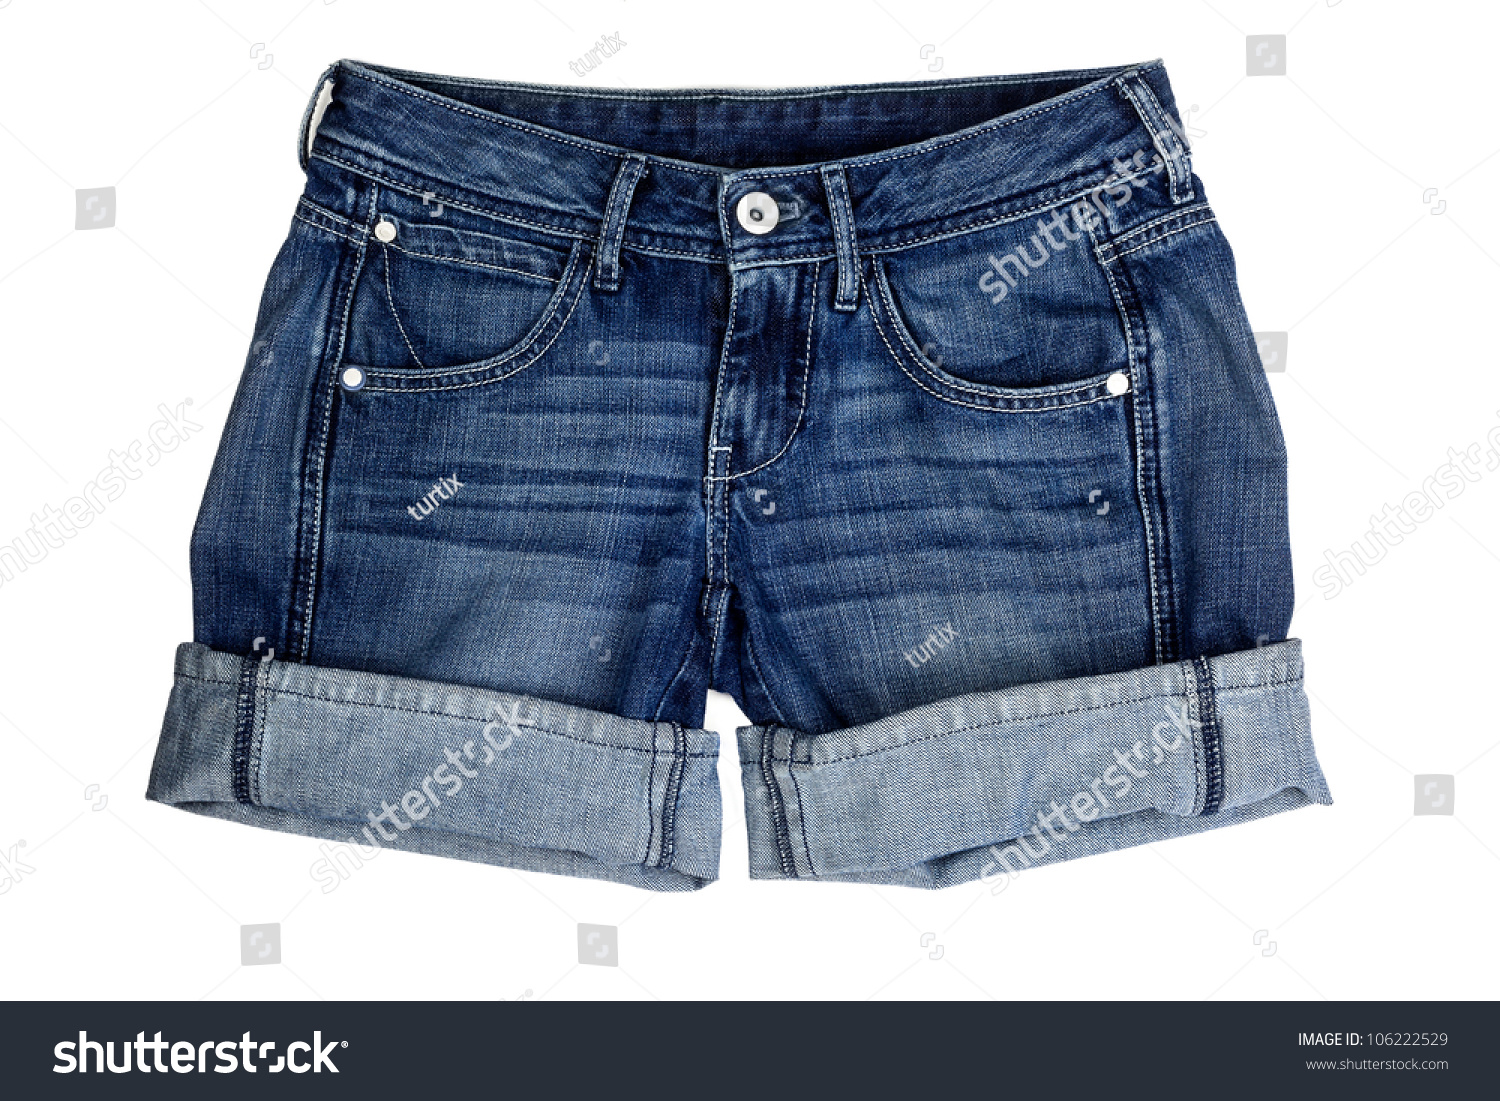 Denim Shorts Stock Photo 106222529 : Shutterstock